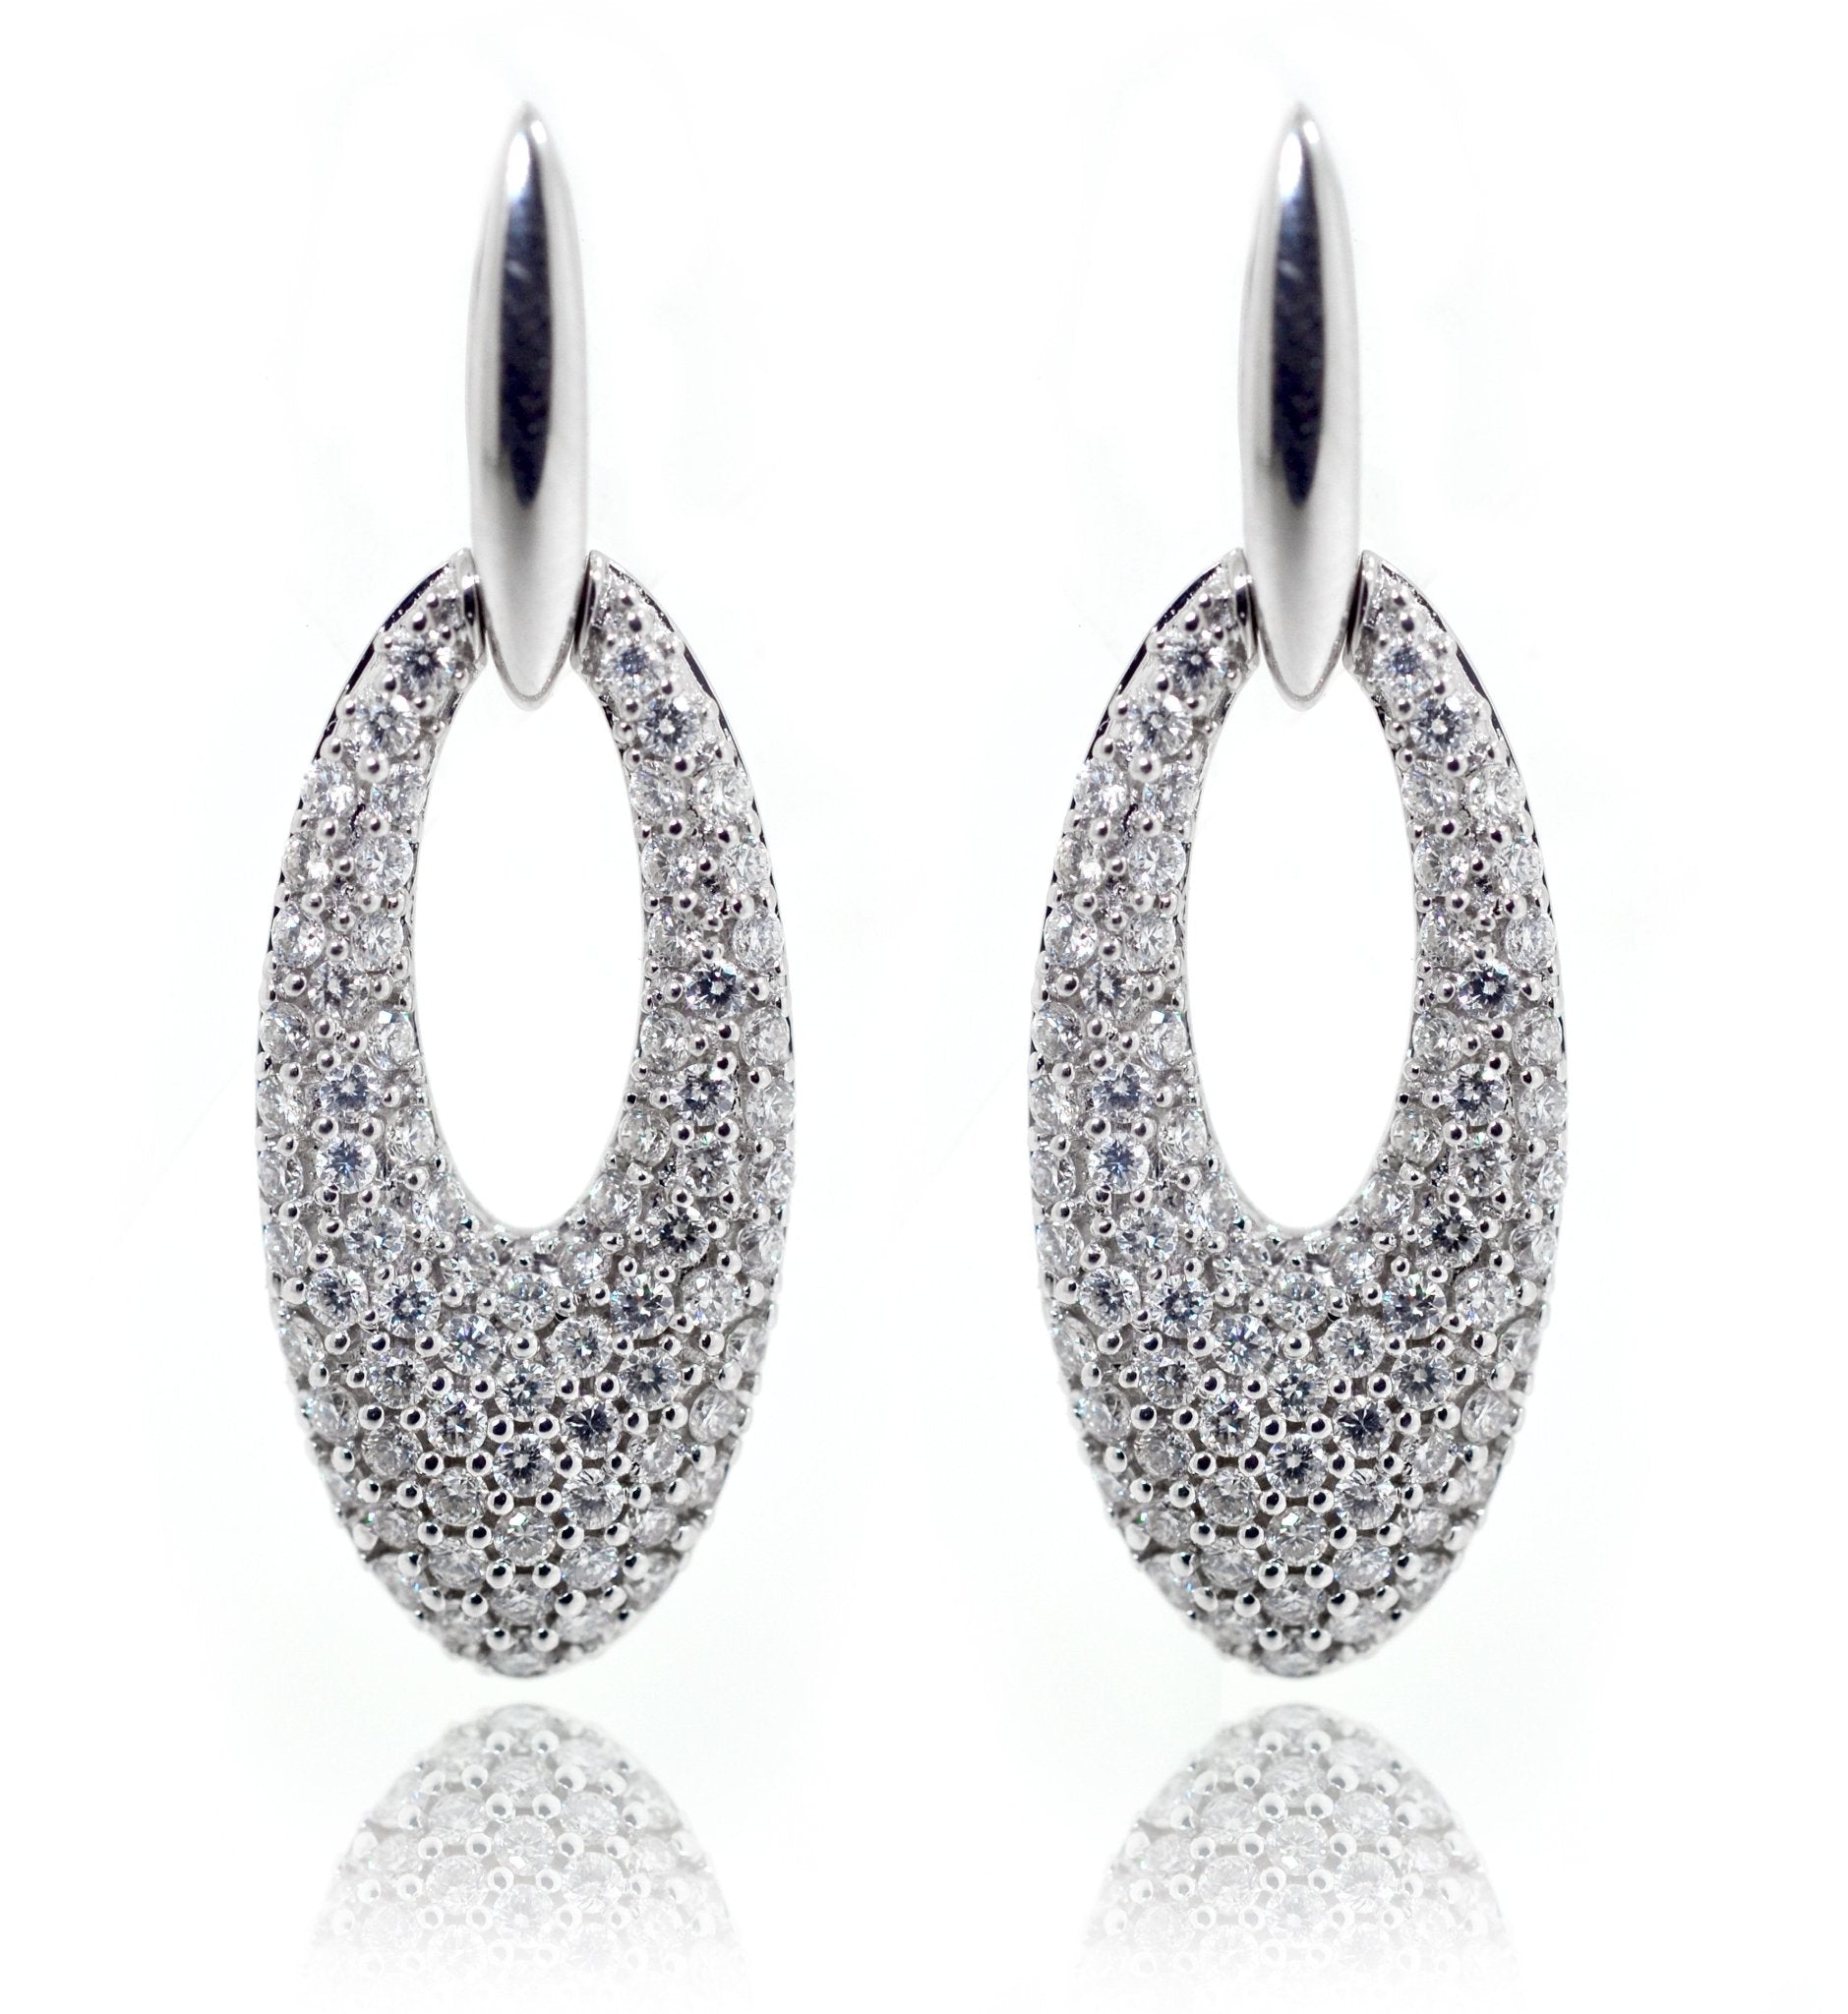 18ct White Gold Diamond Pave Earrings - ForeverJewels Design Studio 8